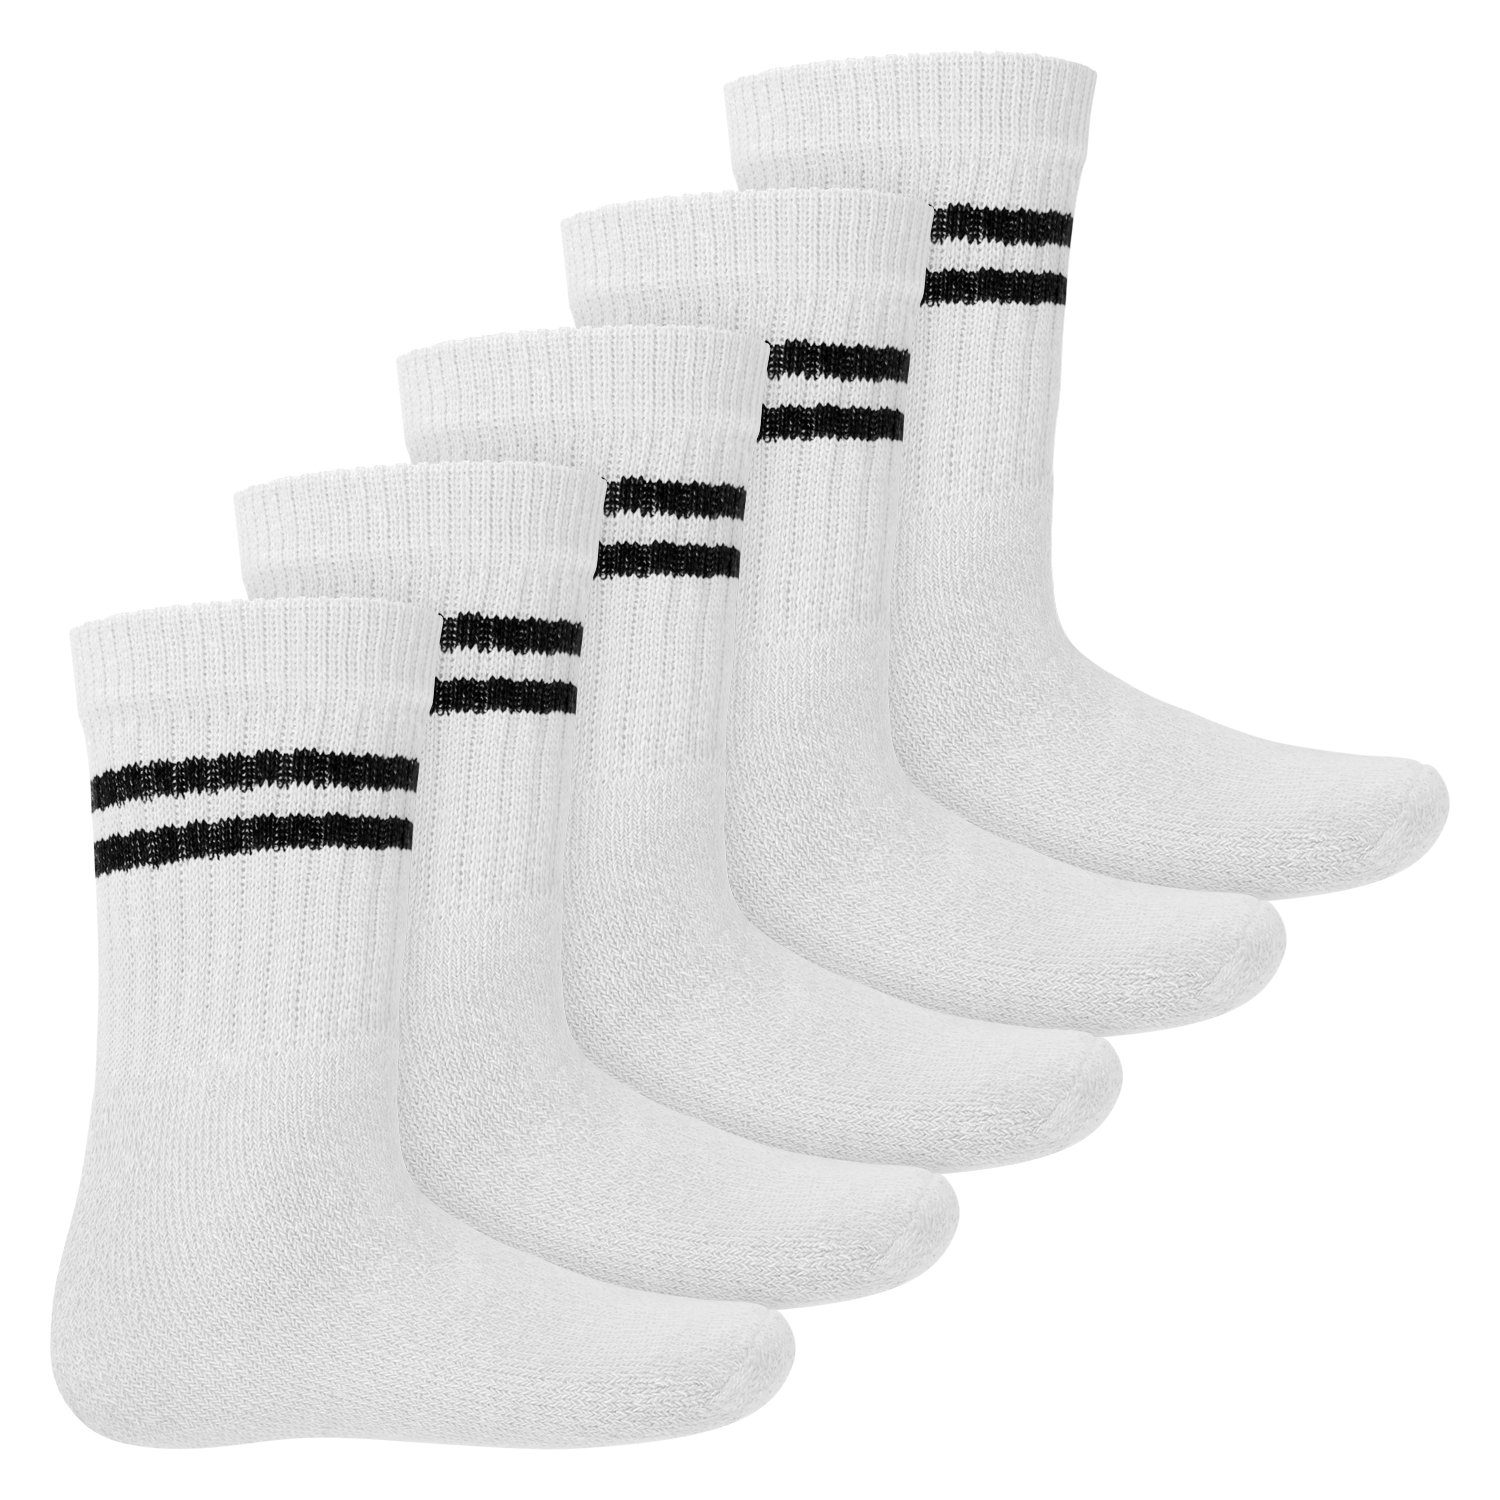 MT Tennissocken Kinder Mädchen Tennissocken (5/10 Jungen (5-Paar) Weiß Freizeit & 5 Paar) x Socken